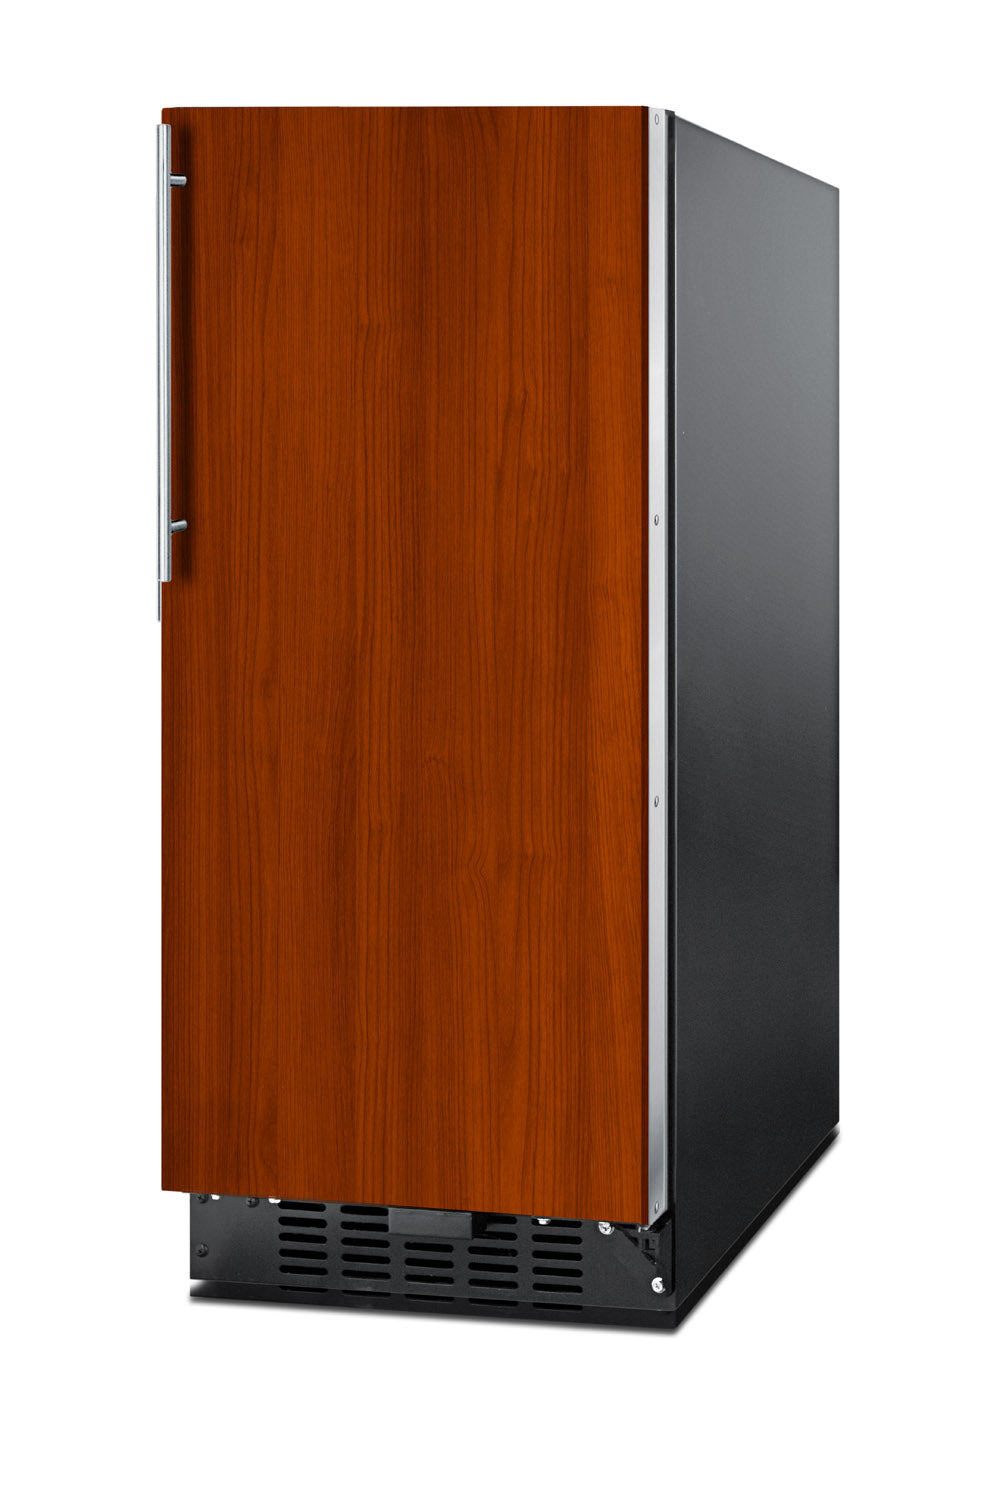 SUMMIT 15 in. Built-In All-Refrigerator, ADA Compliant (ALR15)